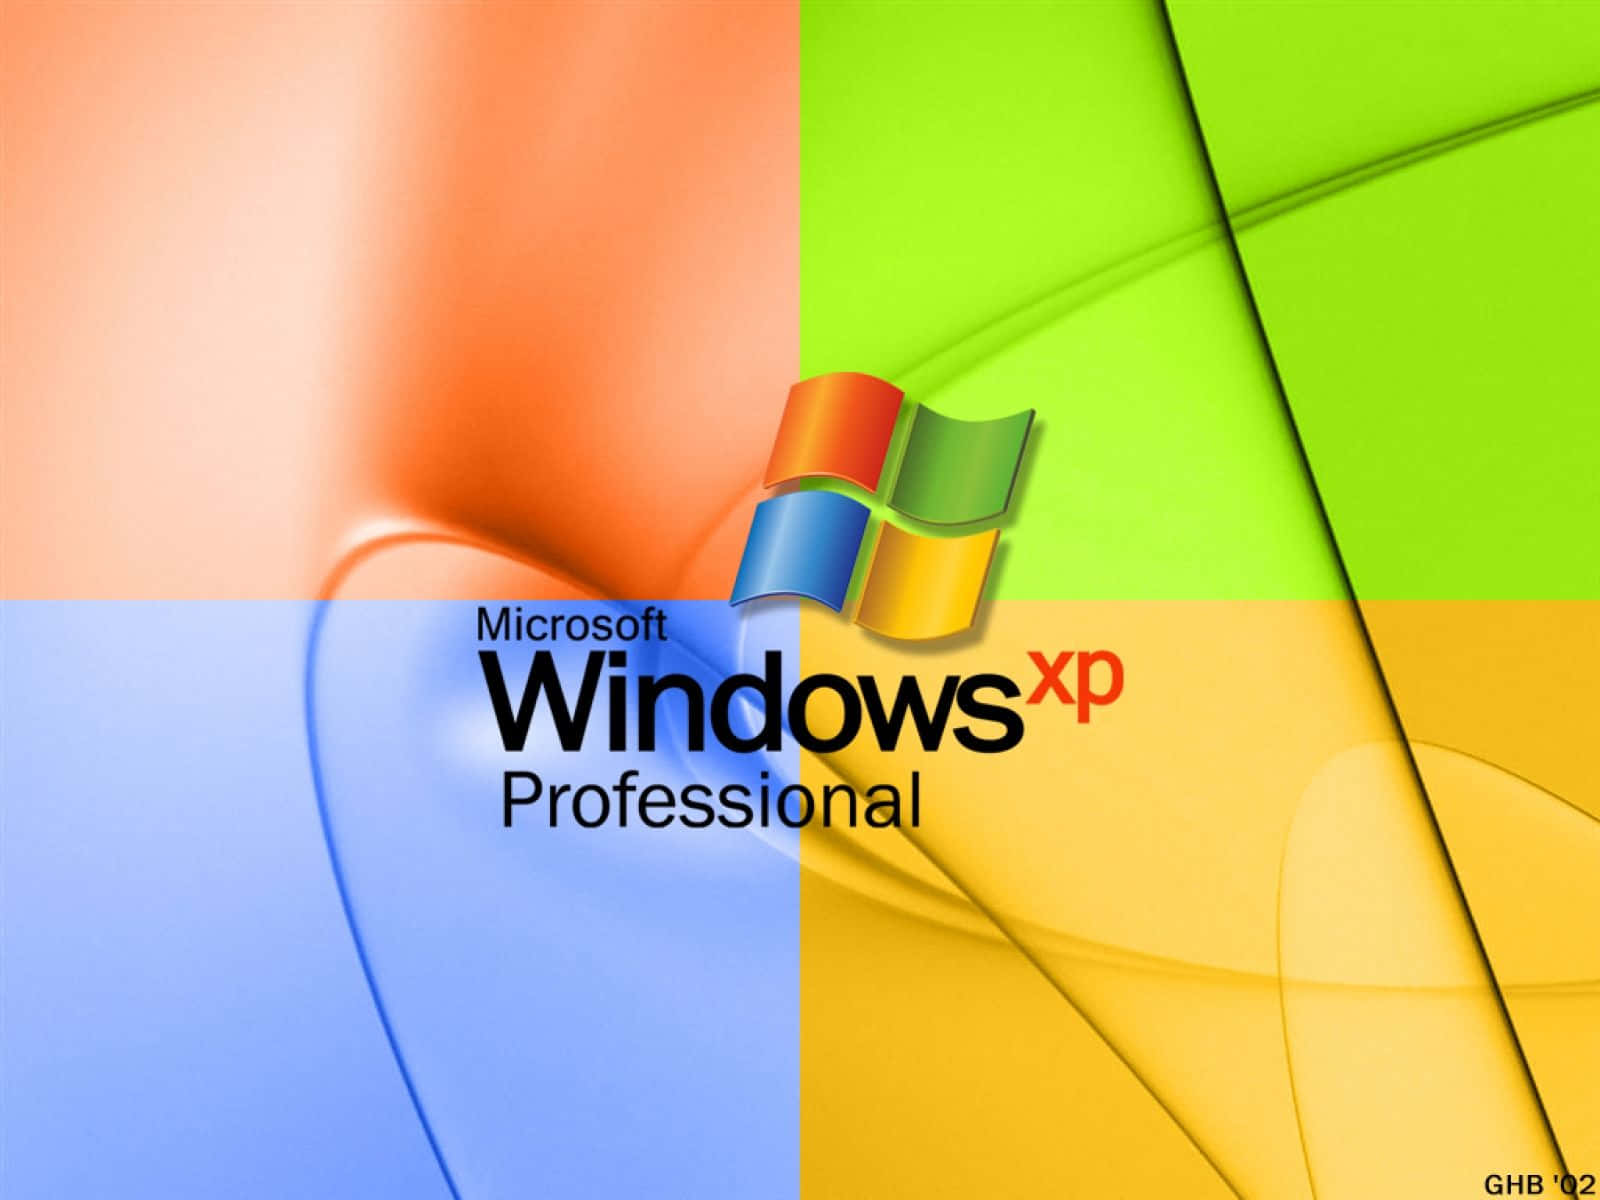 The classic Microsoft Windows XP logo against a blue gradient background